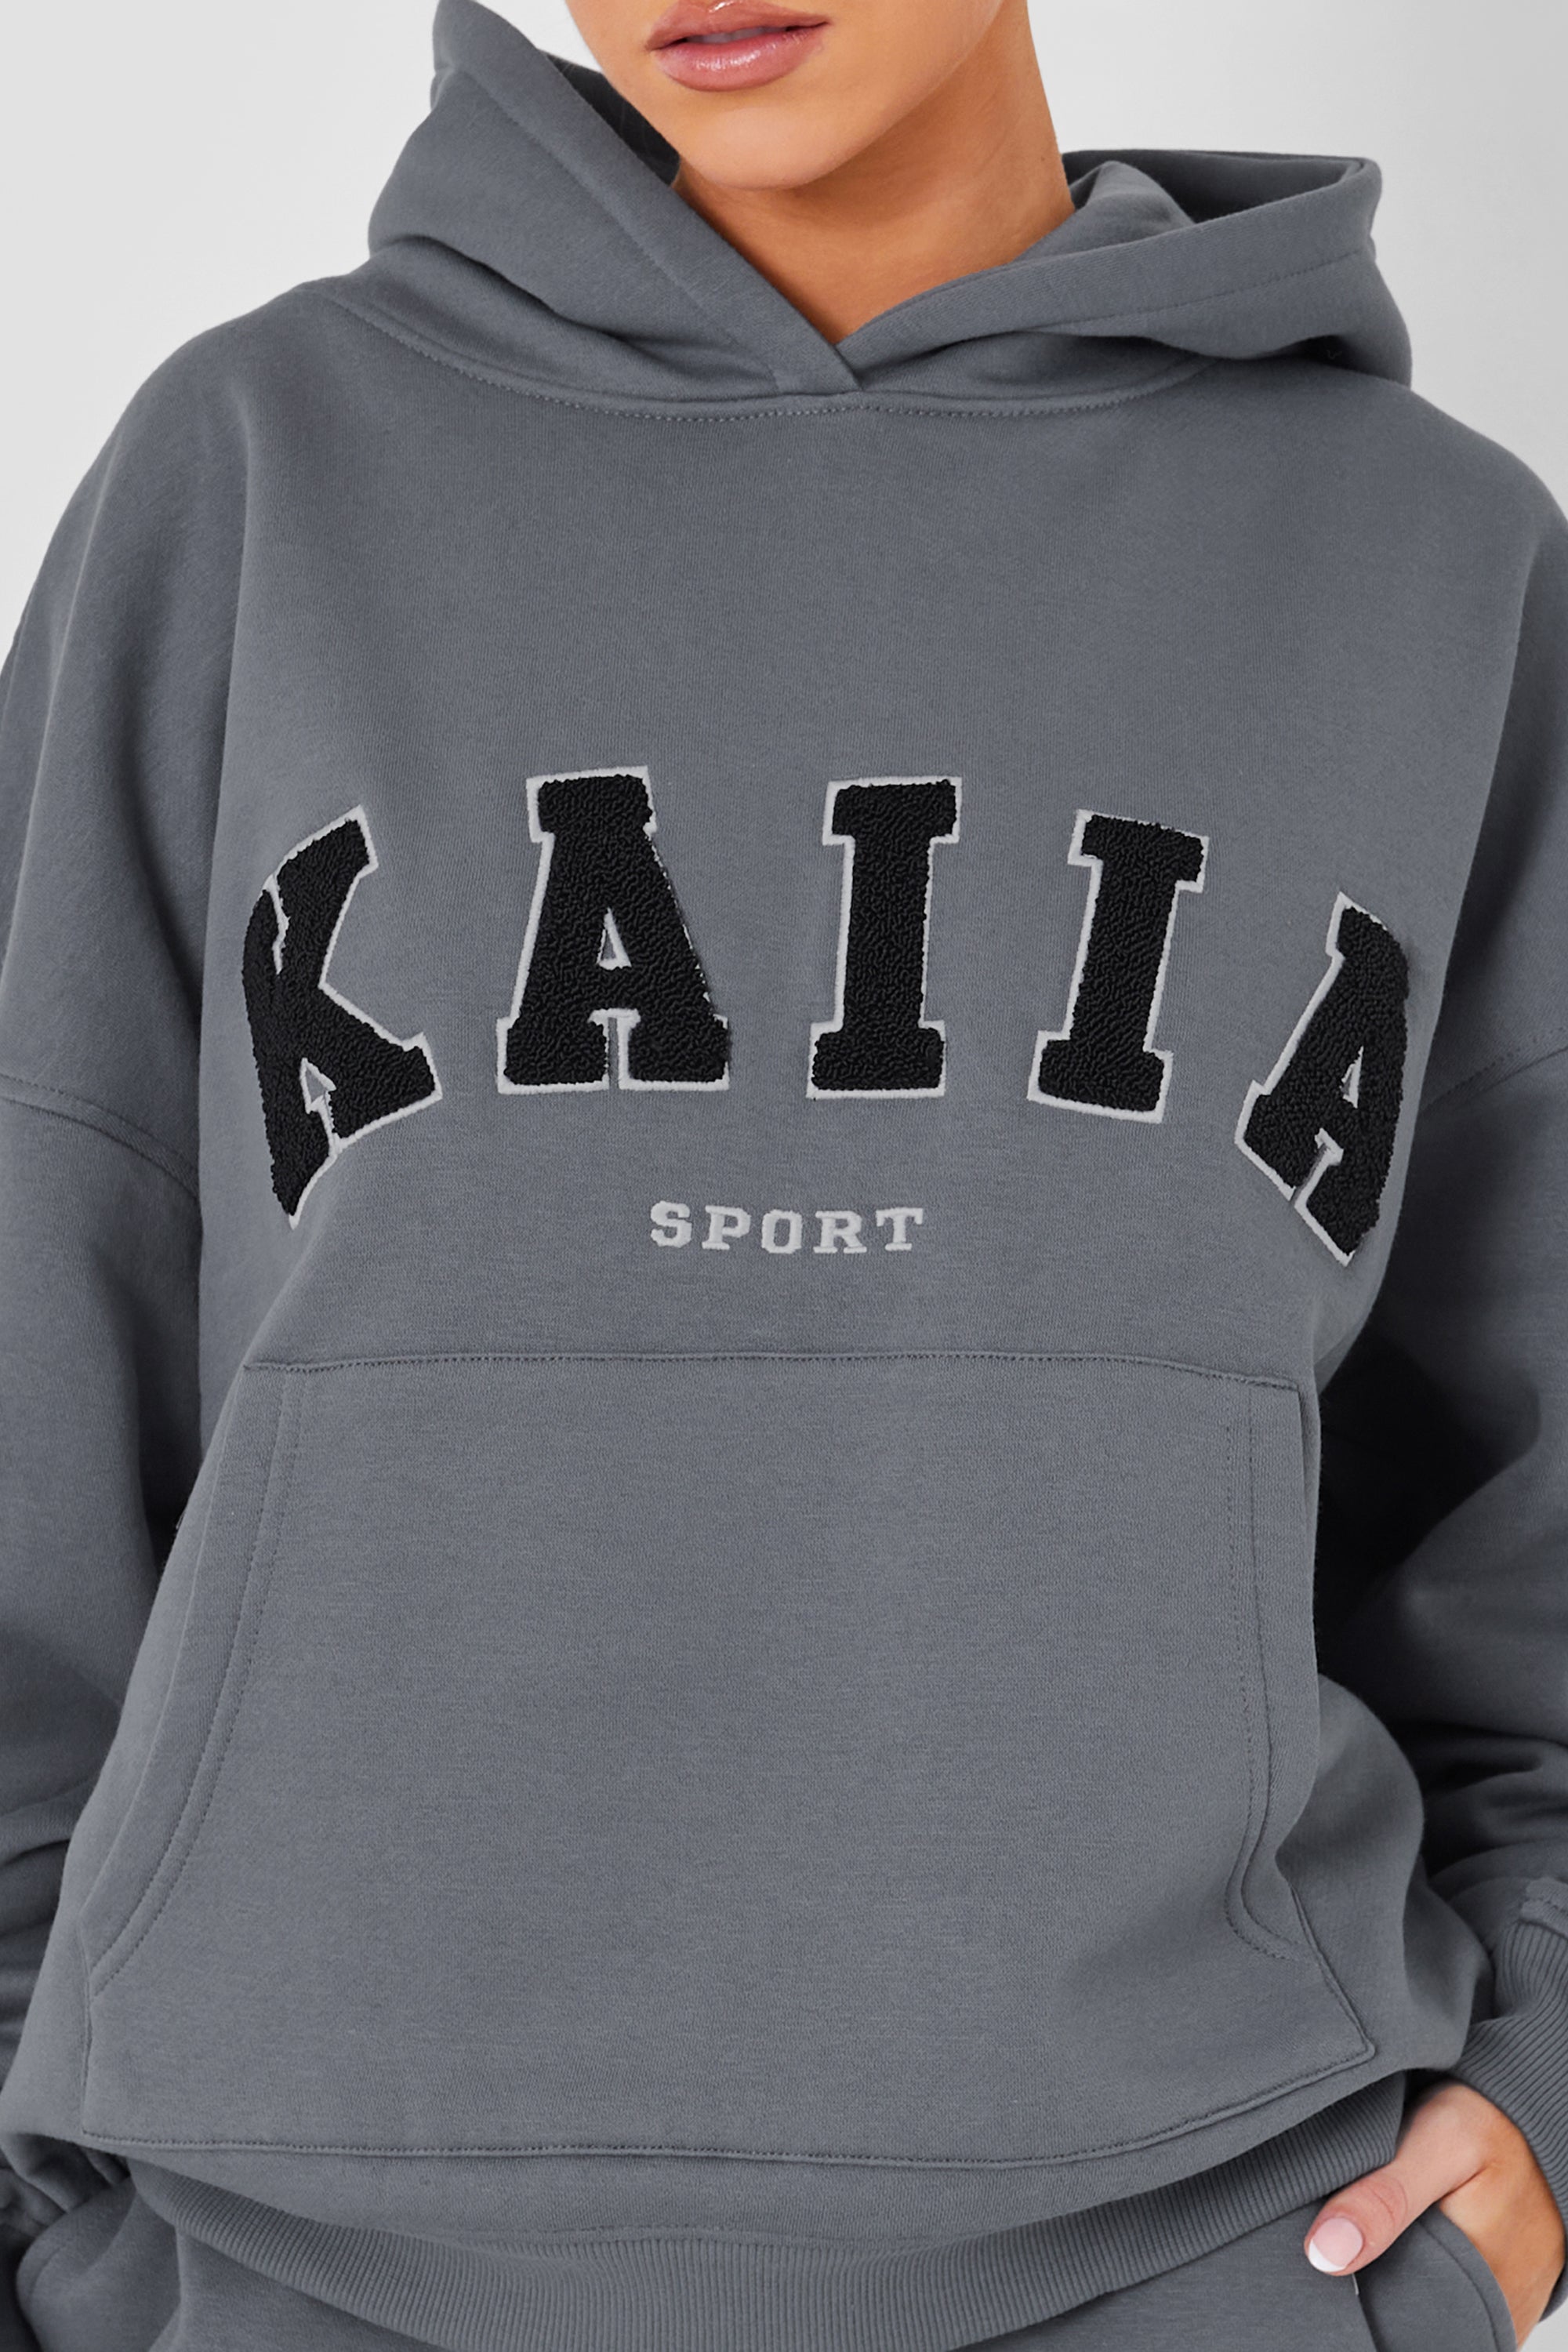 Kaiia Sport Oversized Logo Hoodie in Charcoal Grey